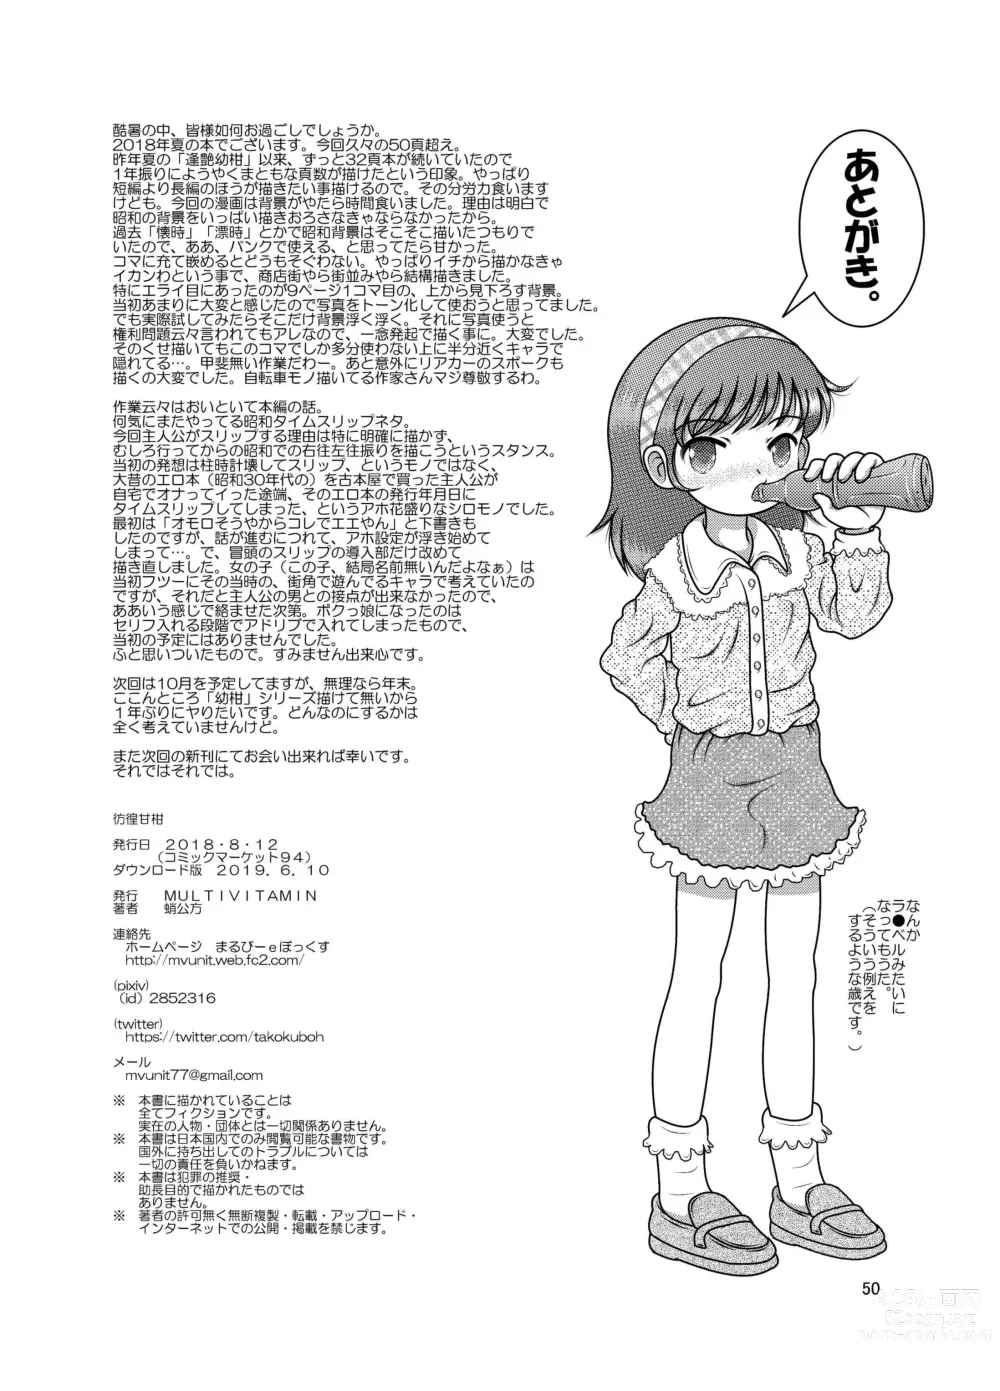 Page 50 of doujinshi Hoko Kankan